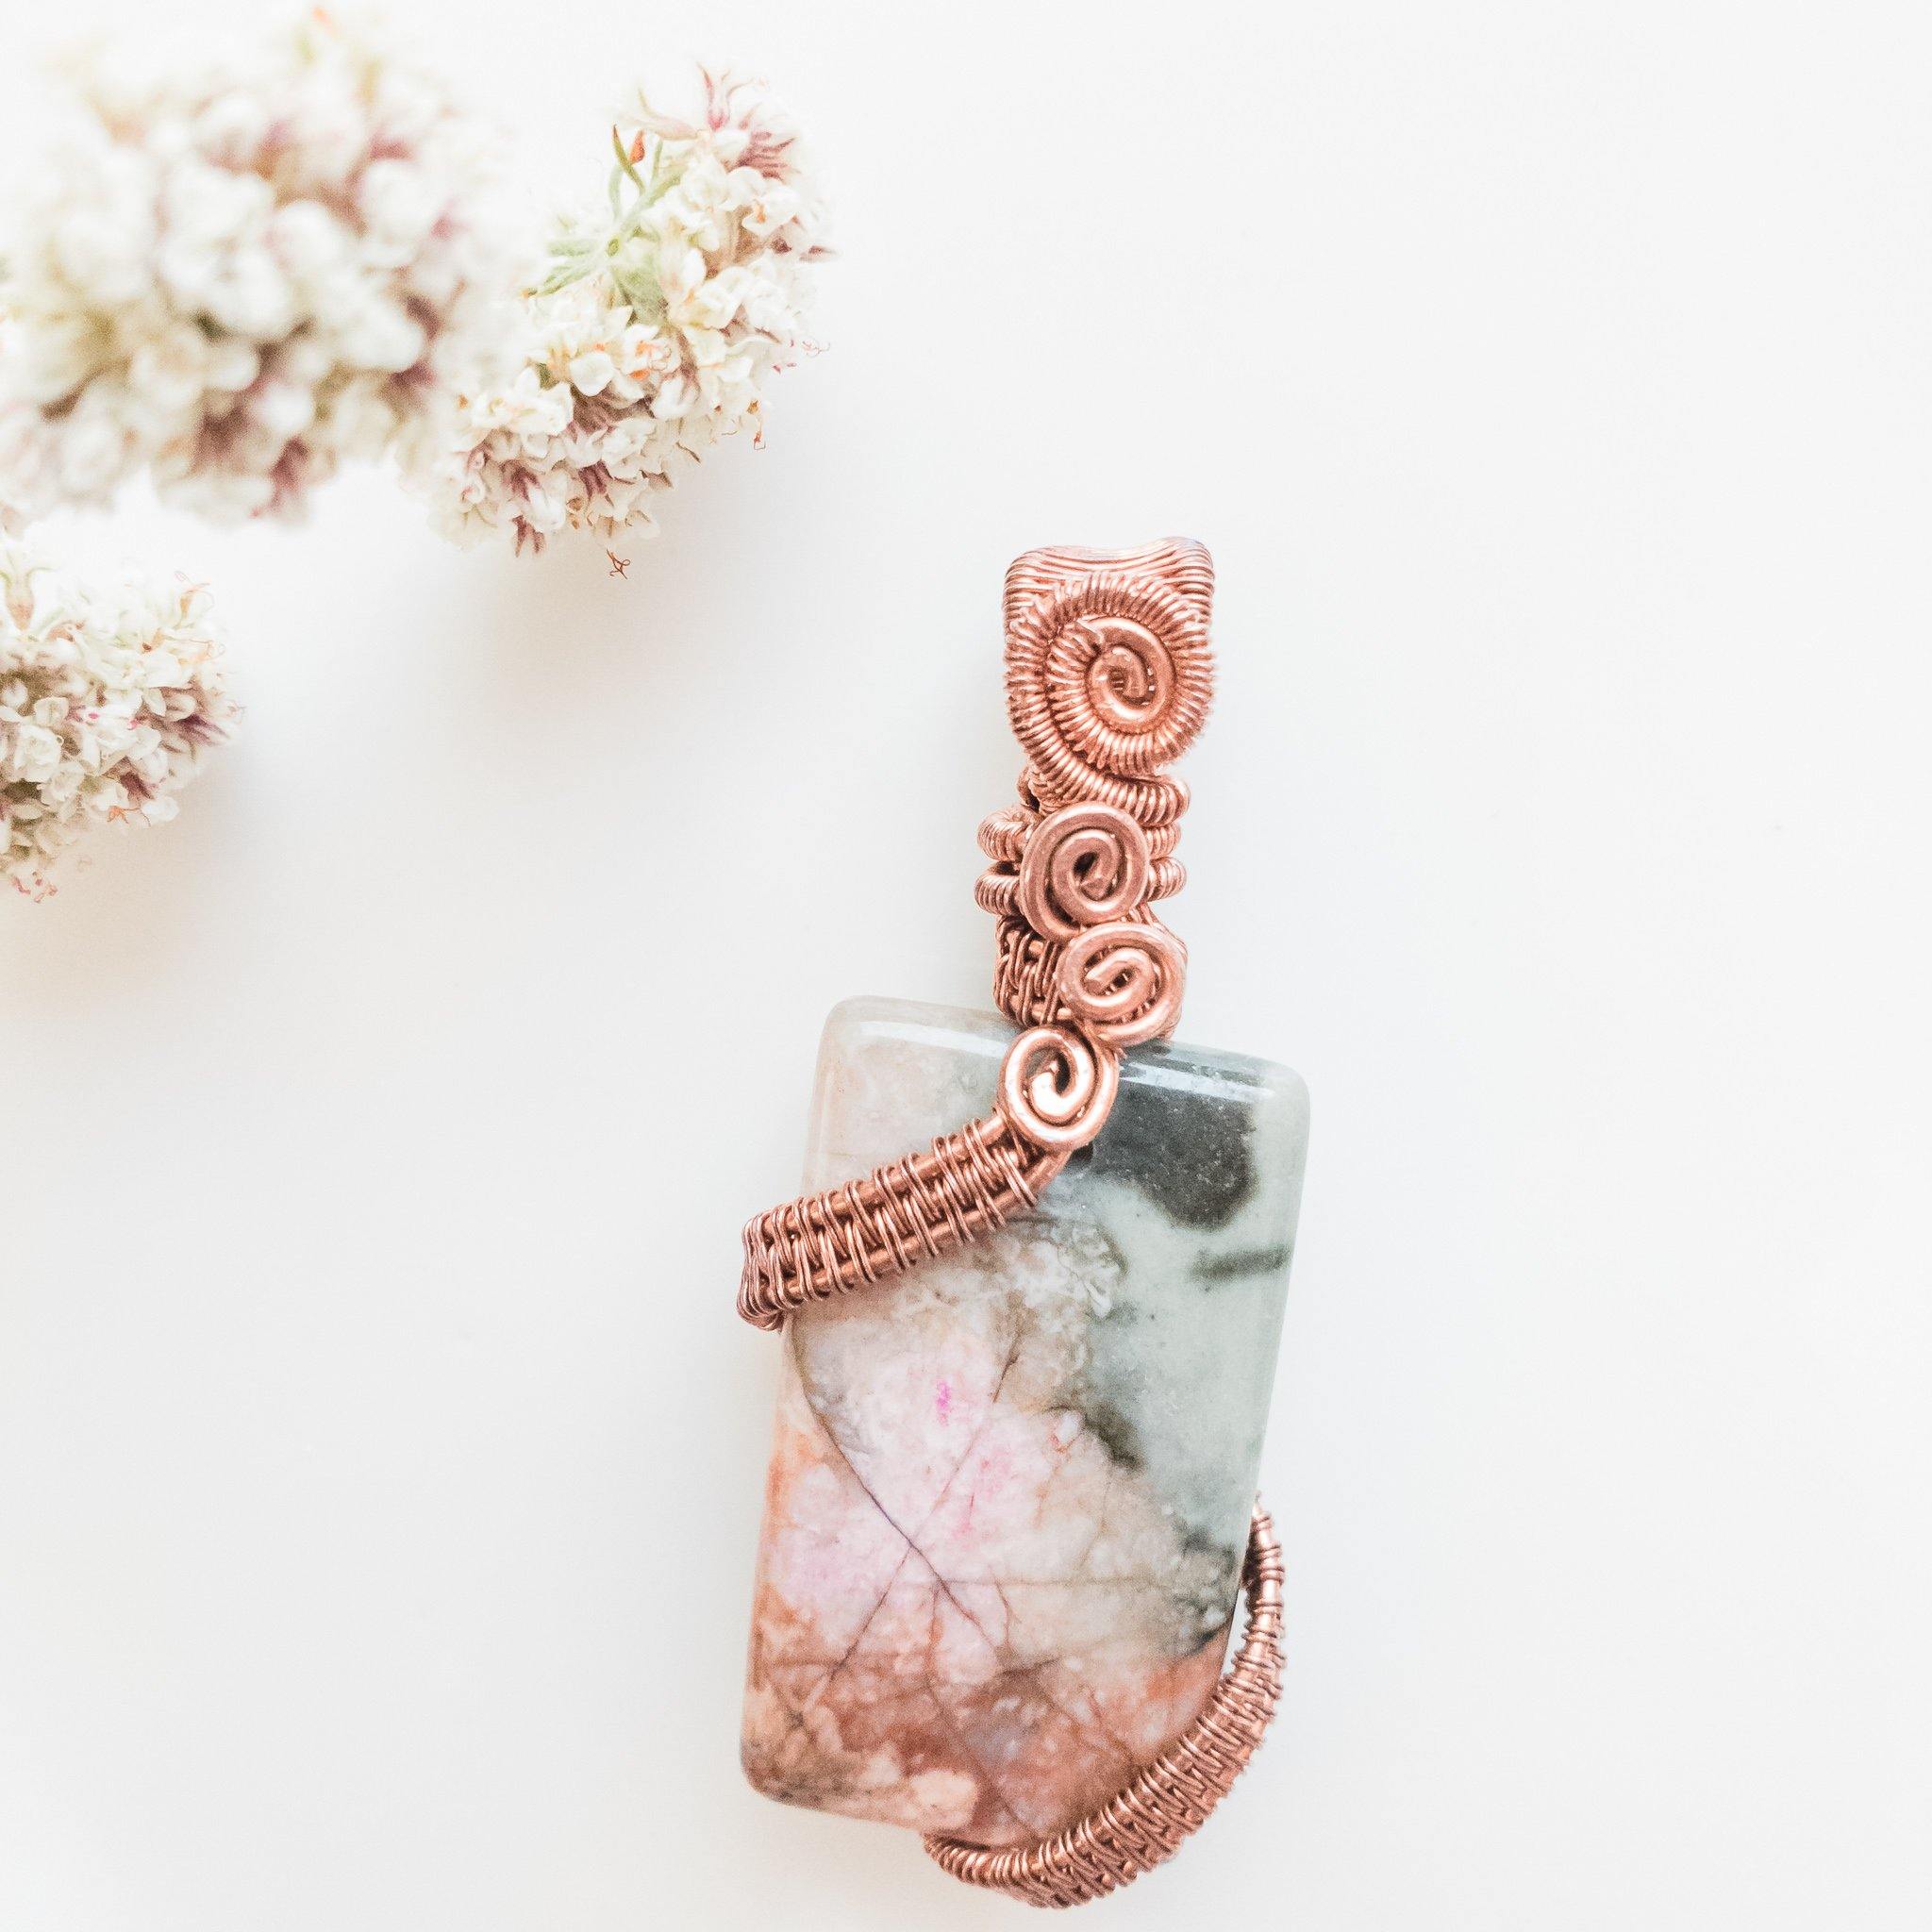 Magnolia Collection - Beautiful and Feminine Rhodonite Pendant designed in Antique Copper - front view - BellaChel Jeweler